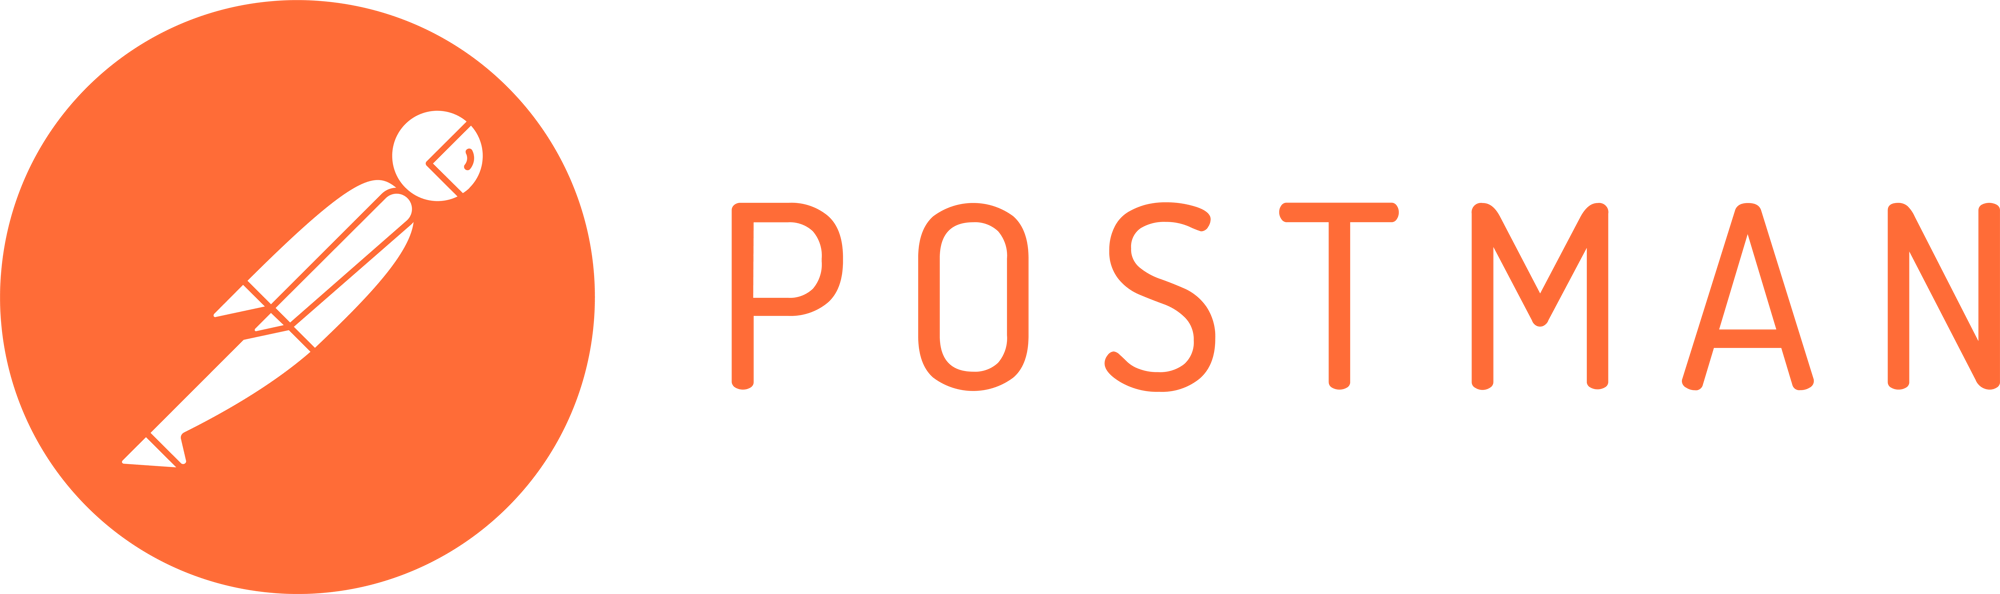 Postman at 1000mm_RGB